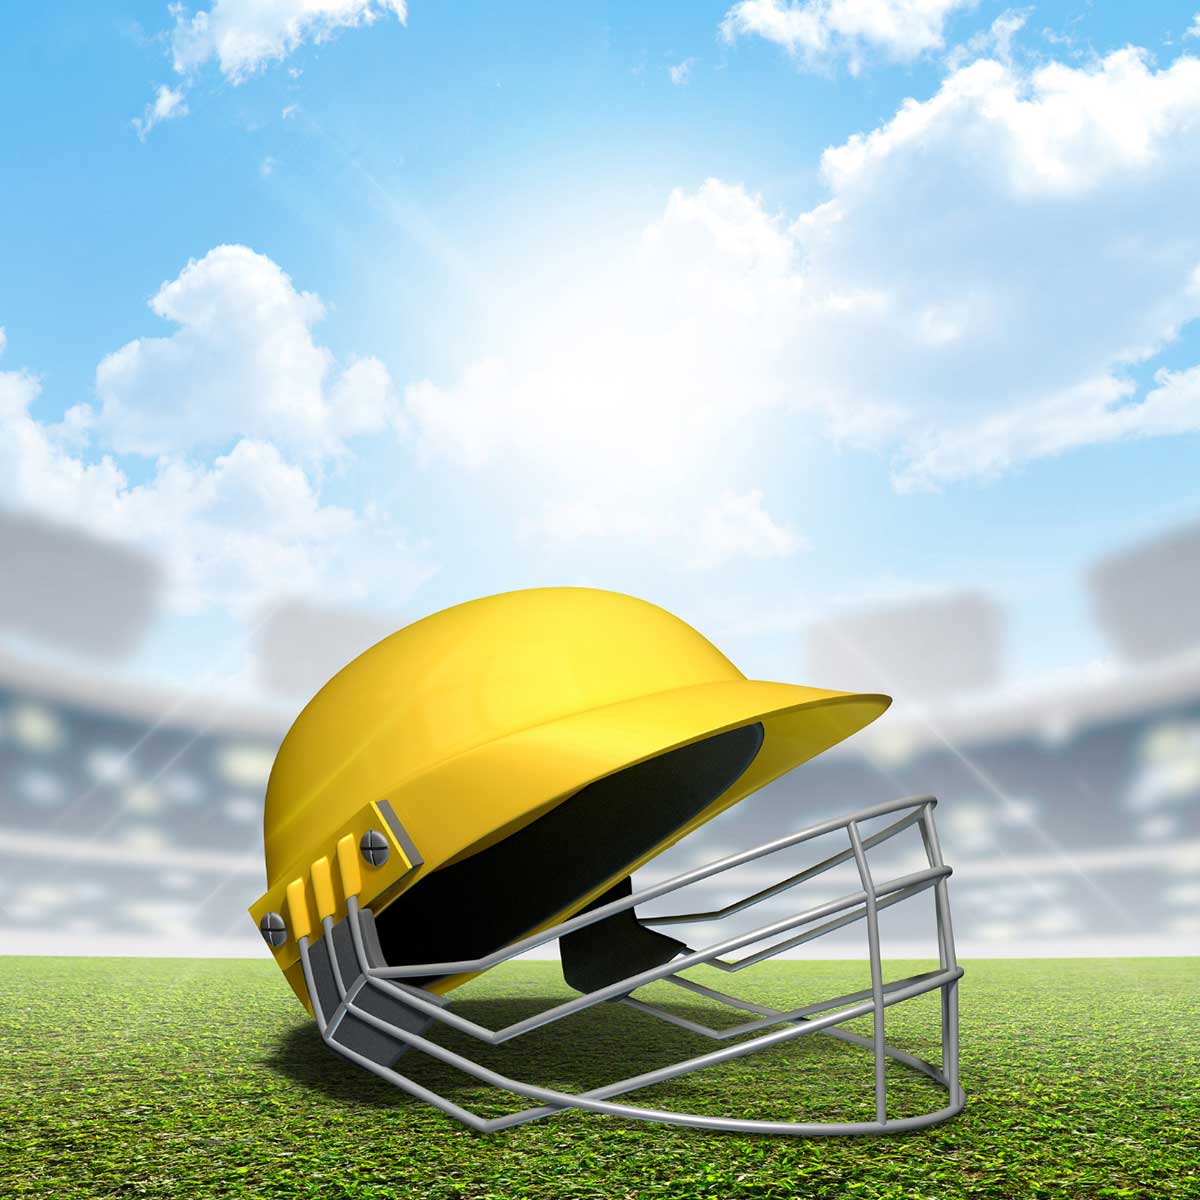 Cricket Helmet Manufacturers in Syktyvkar